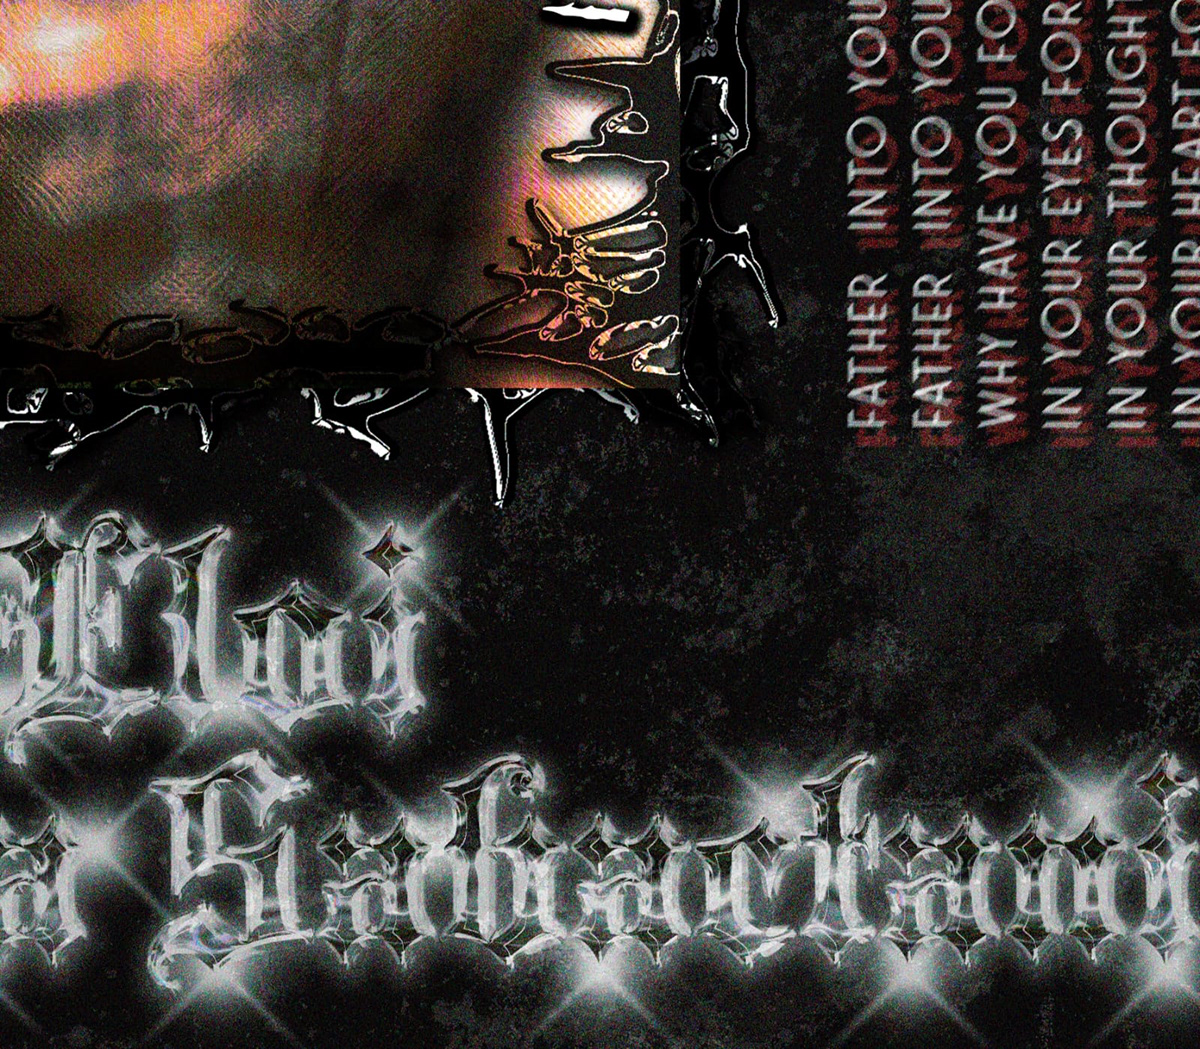 psicodelic Cristo dark art design Illustrator photoshop manipulation medellin religion dark psychedelic